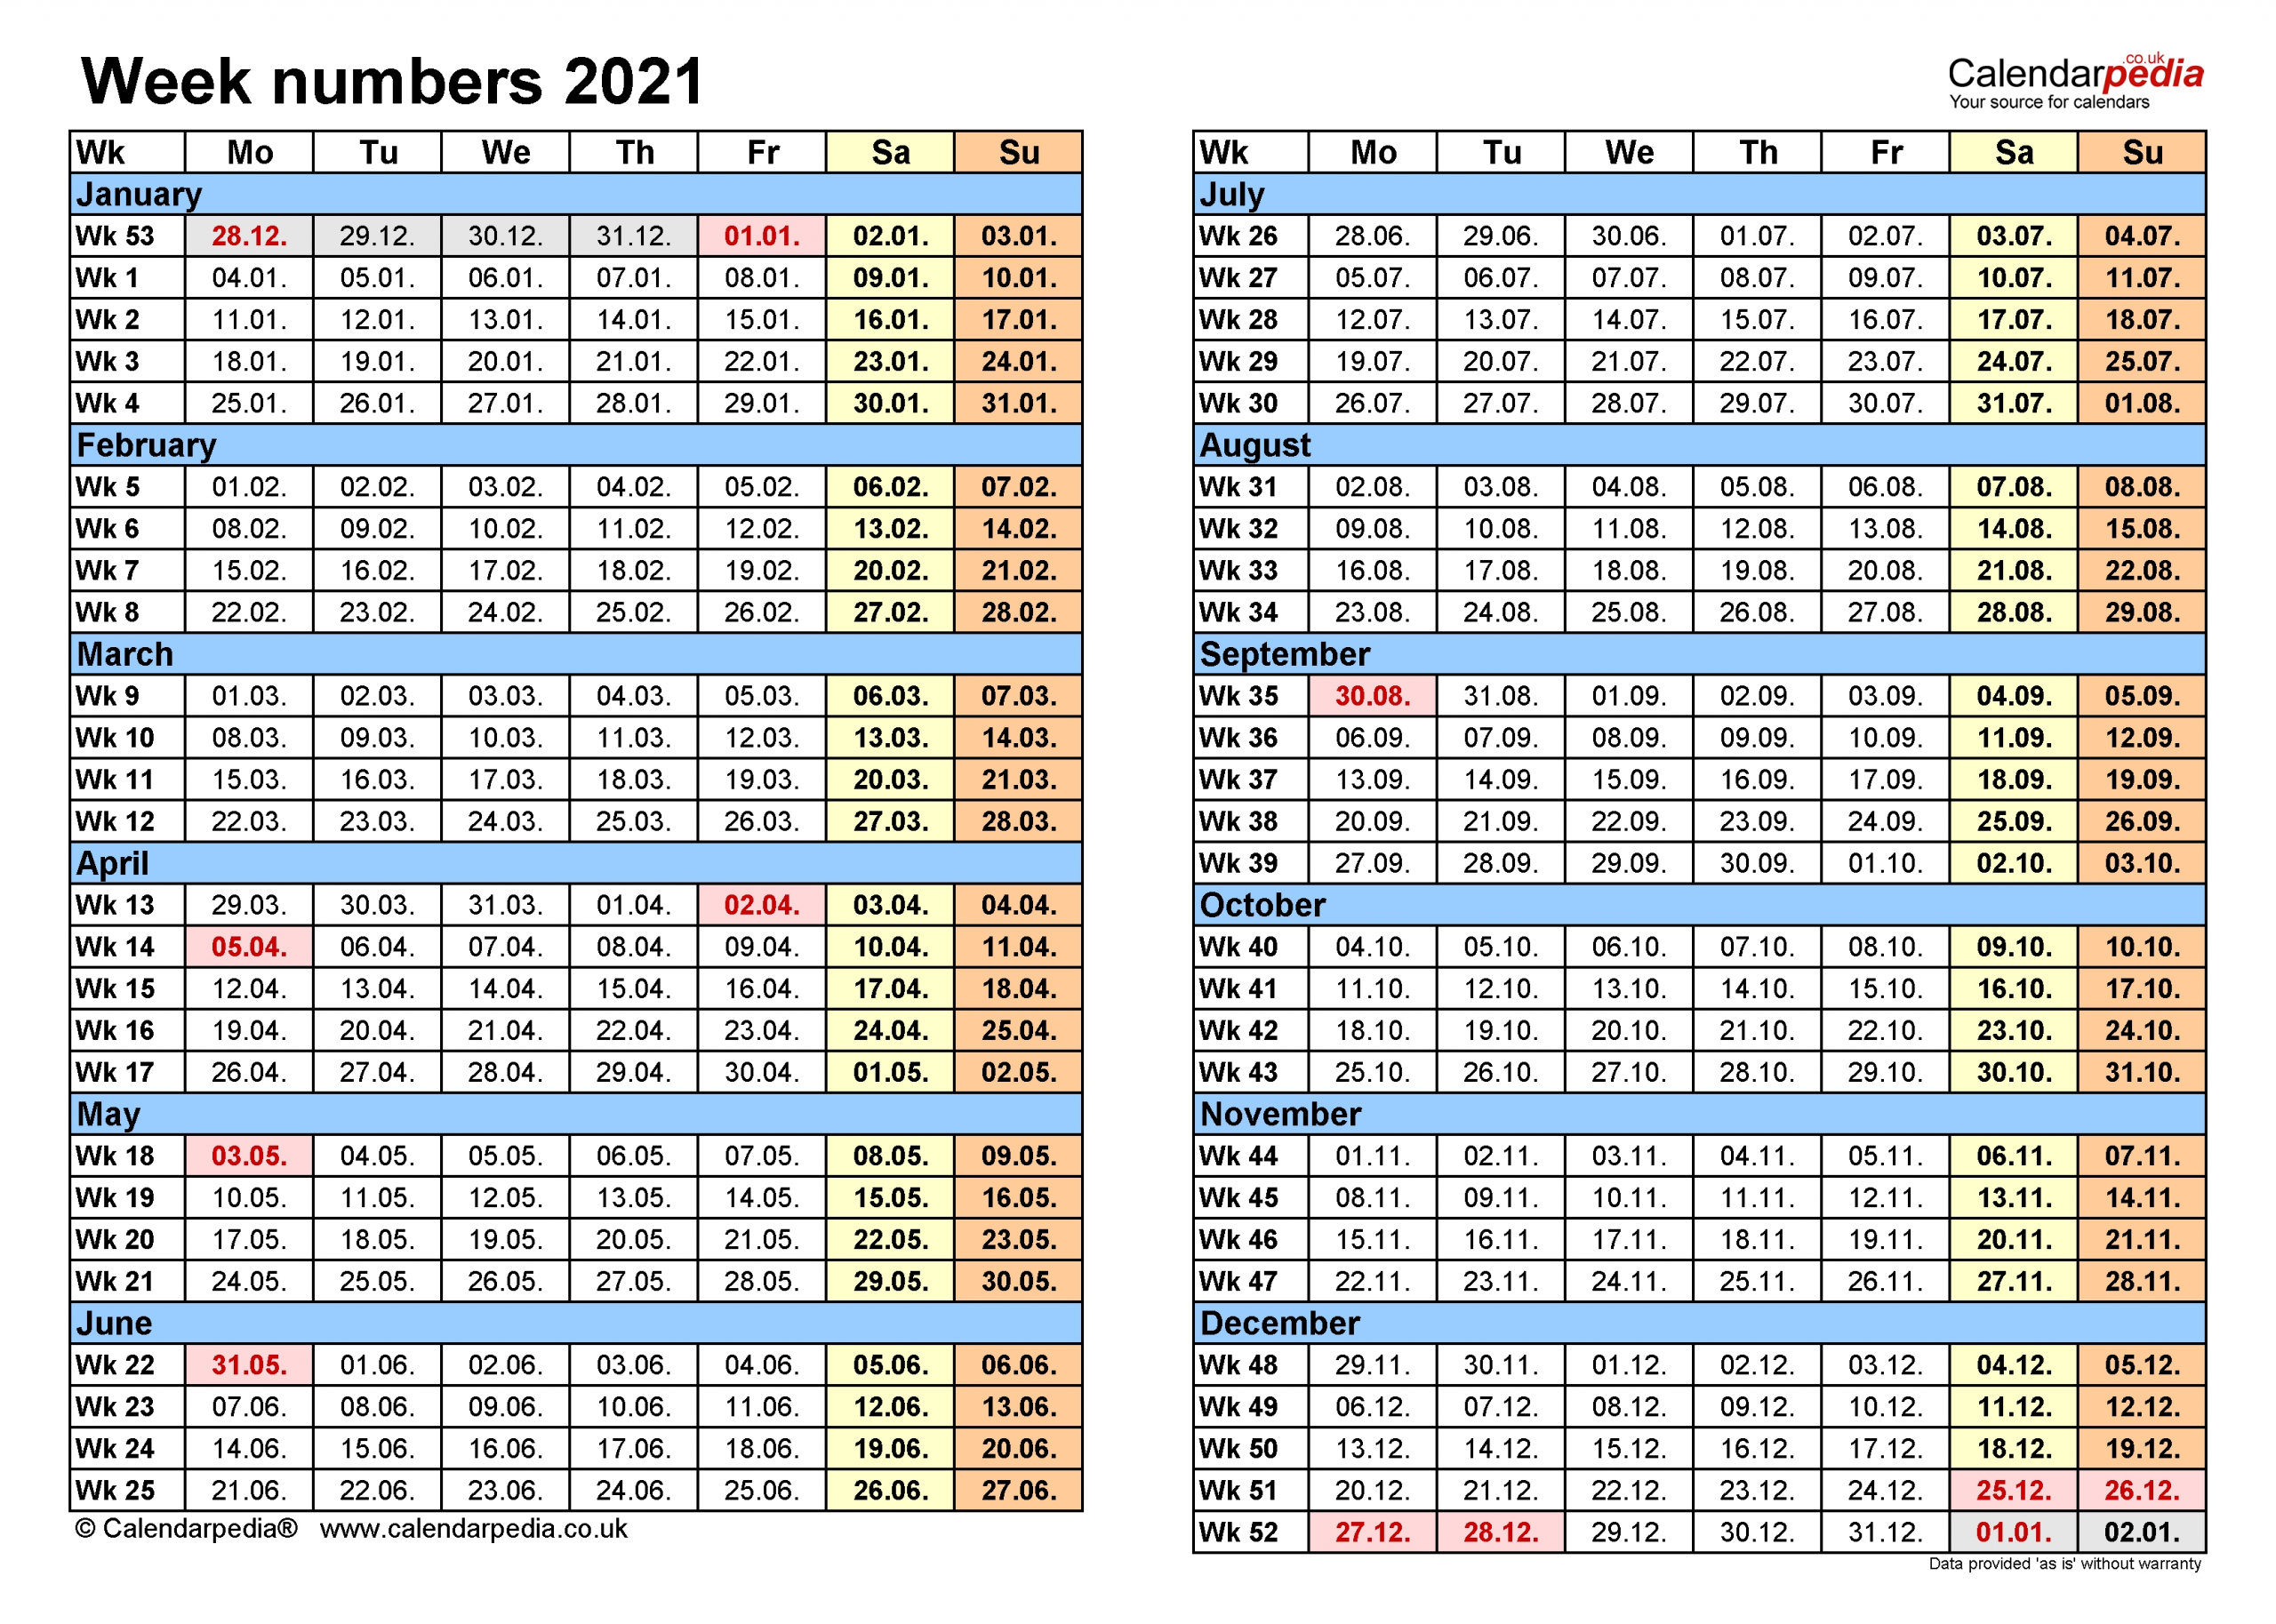 Take Network Rail Week Numbers 2021